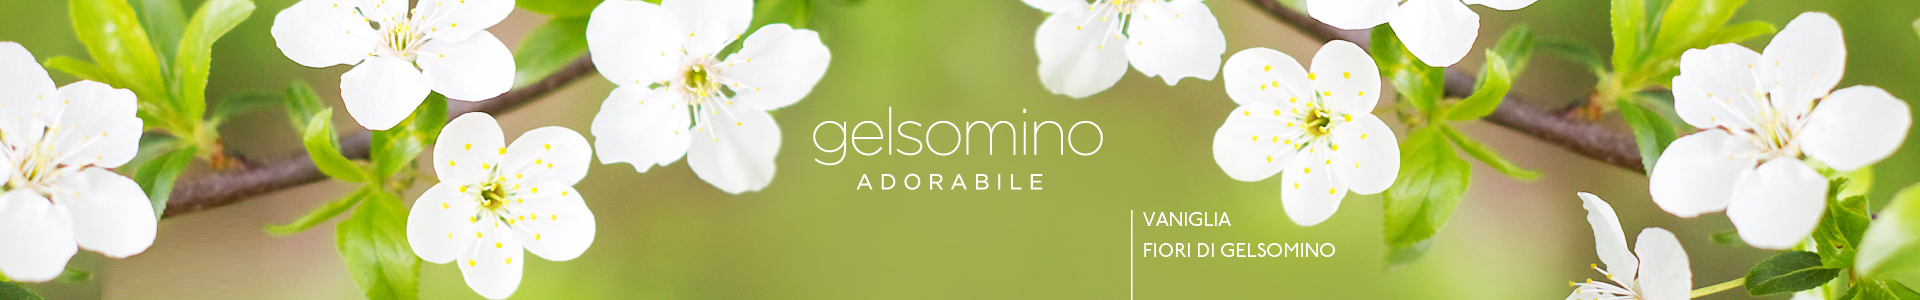 Gelsomino-Adorabile-1920x300-021018-1.jpg